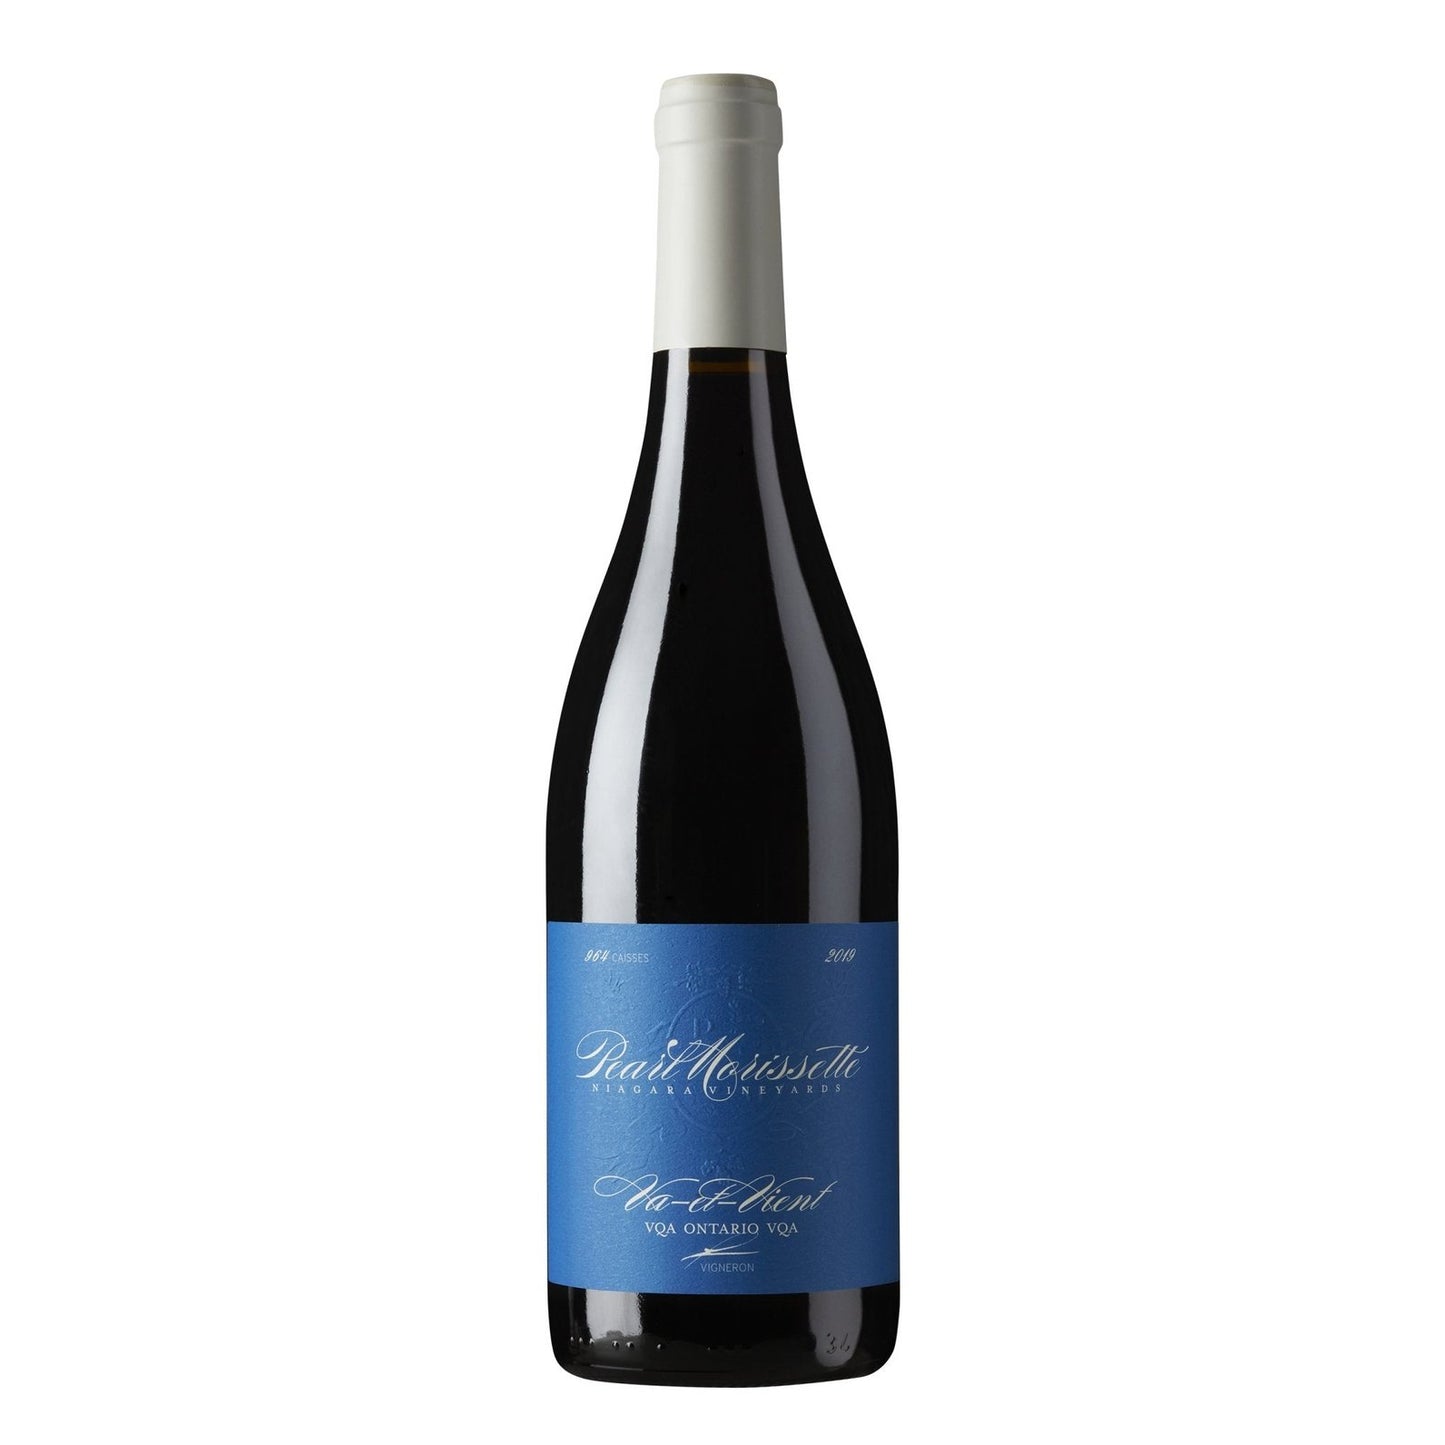 2019 Pearl Morissette “Va-et-Vient” Meritage Blend - Carl's Wine Club